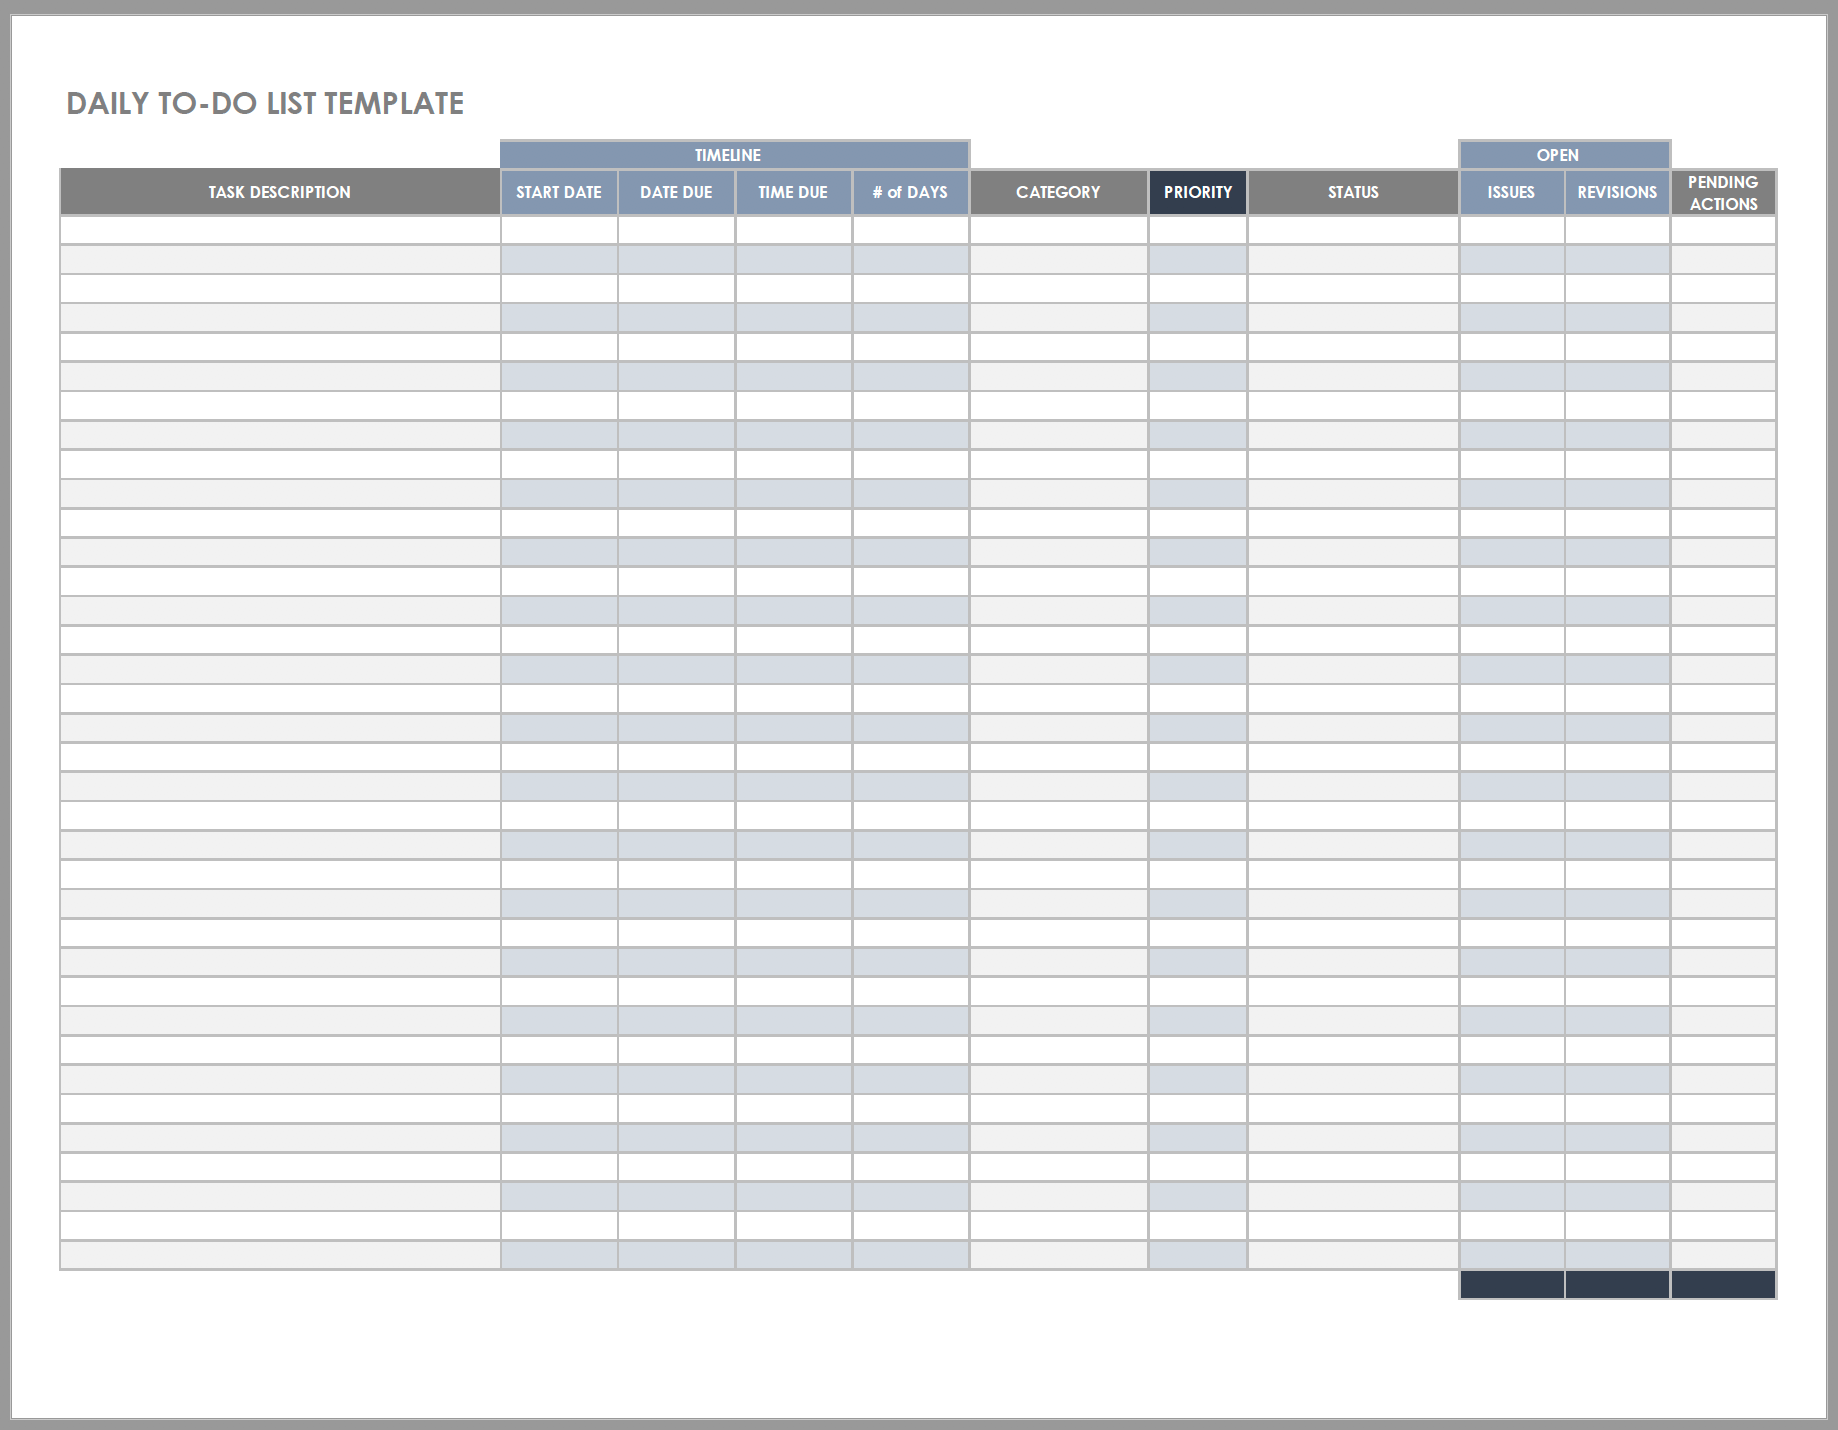 Free Daily Work Schedule Templates  Smartsheet Throughout Employee Daily Task Checklist Template Throughout Employee Daily Task Checklist Template